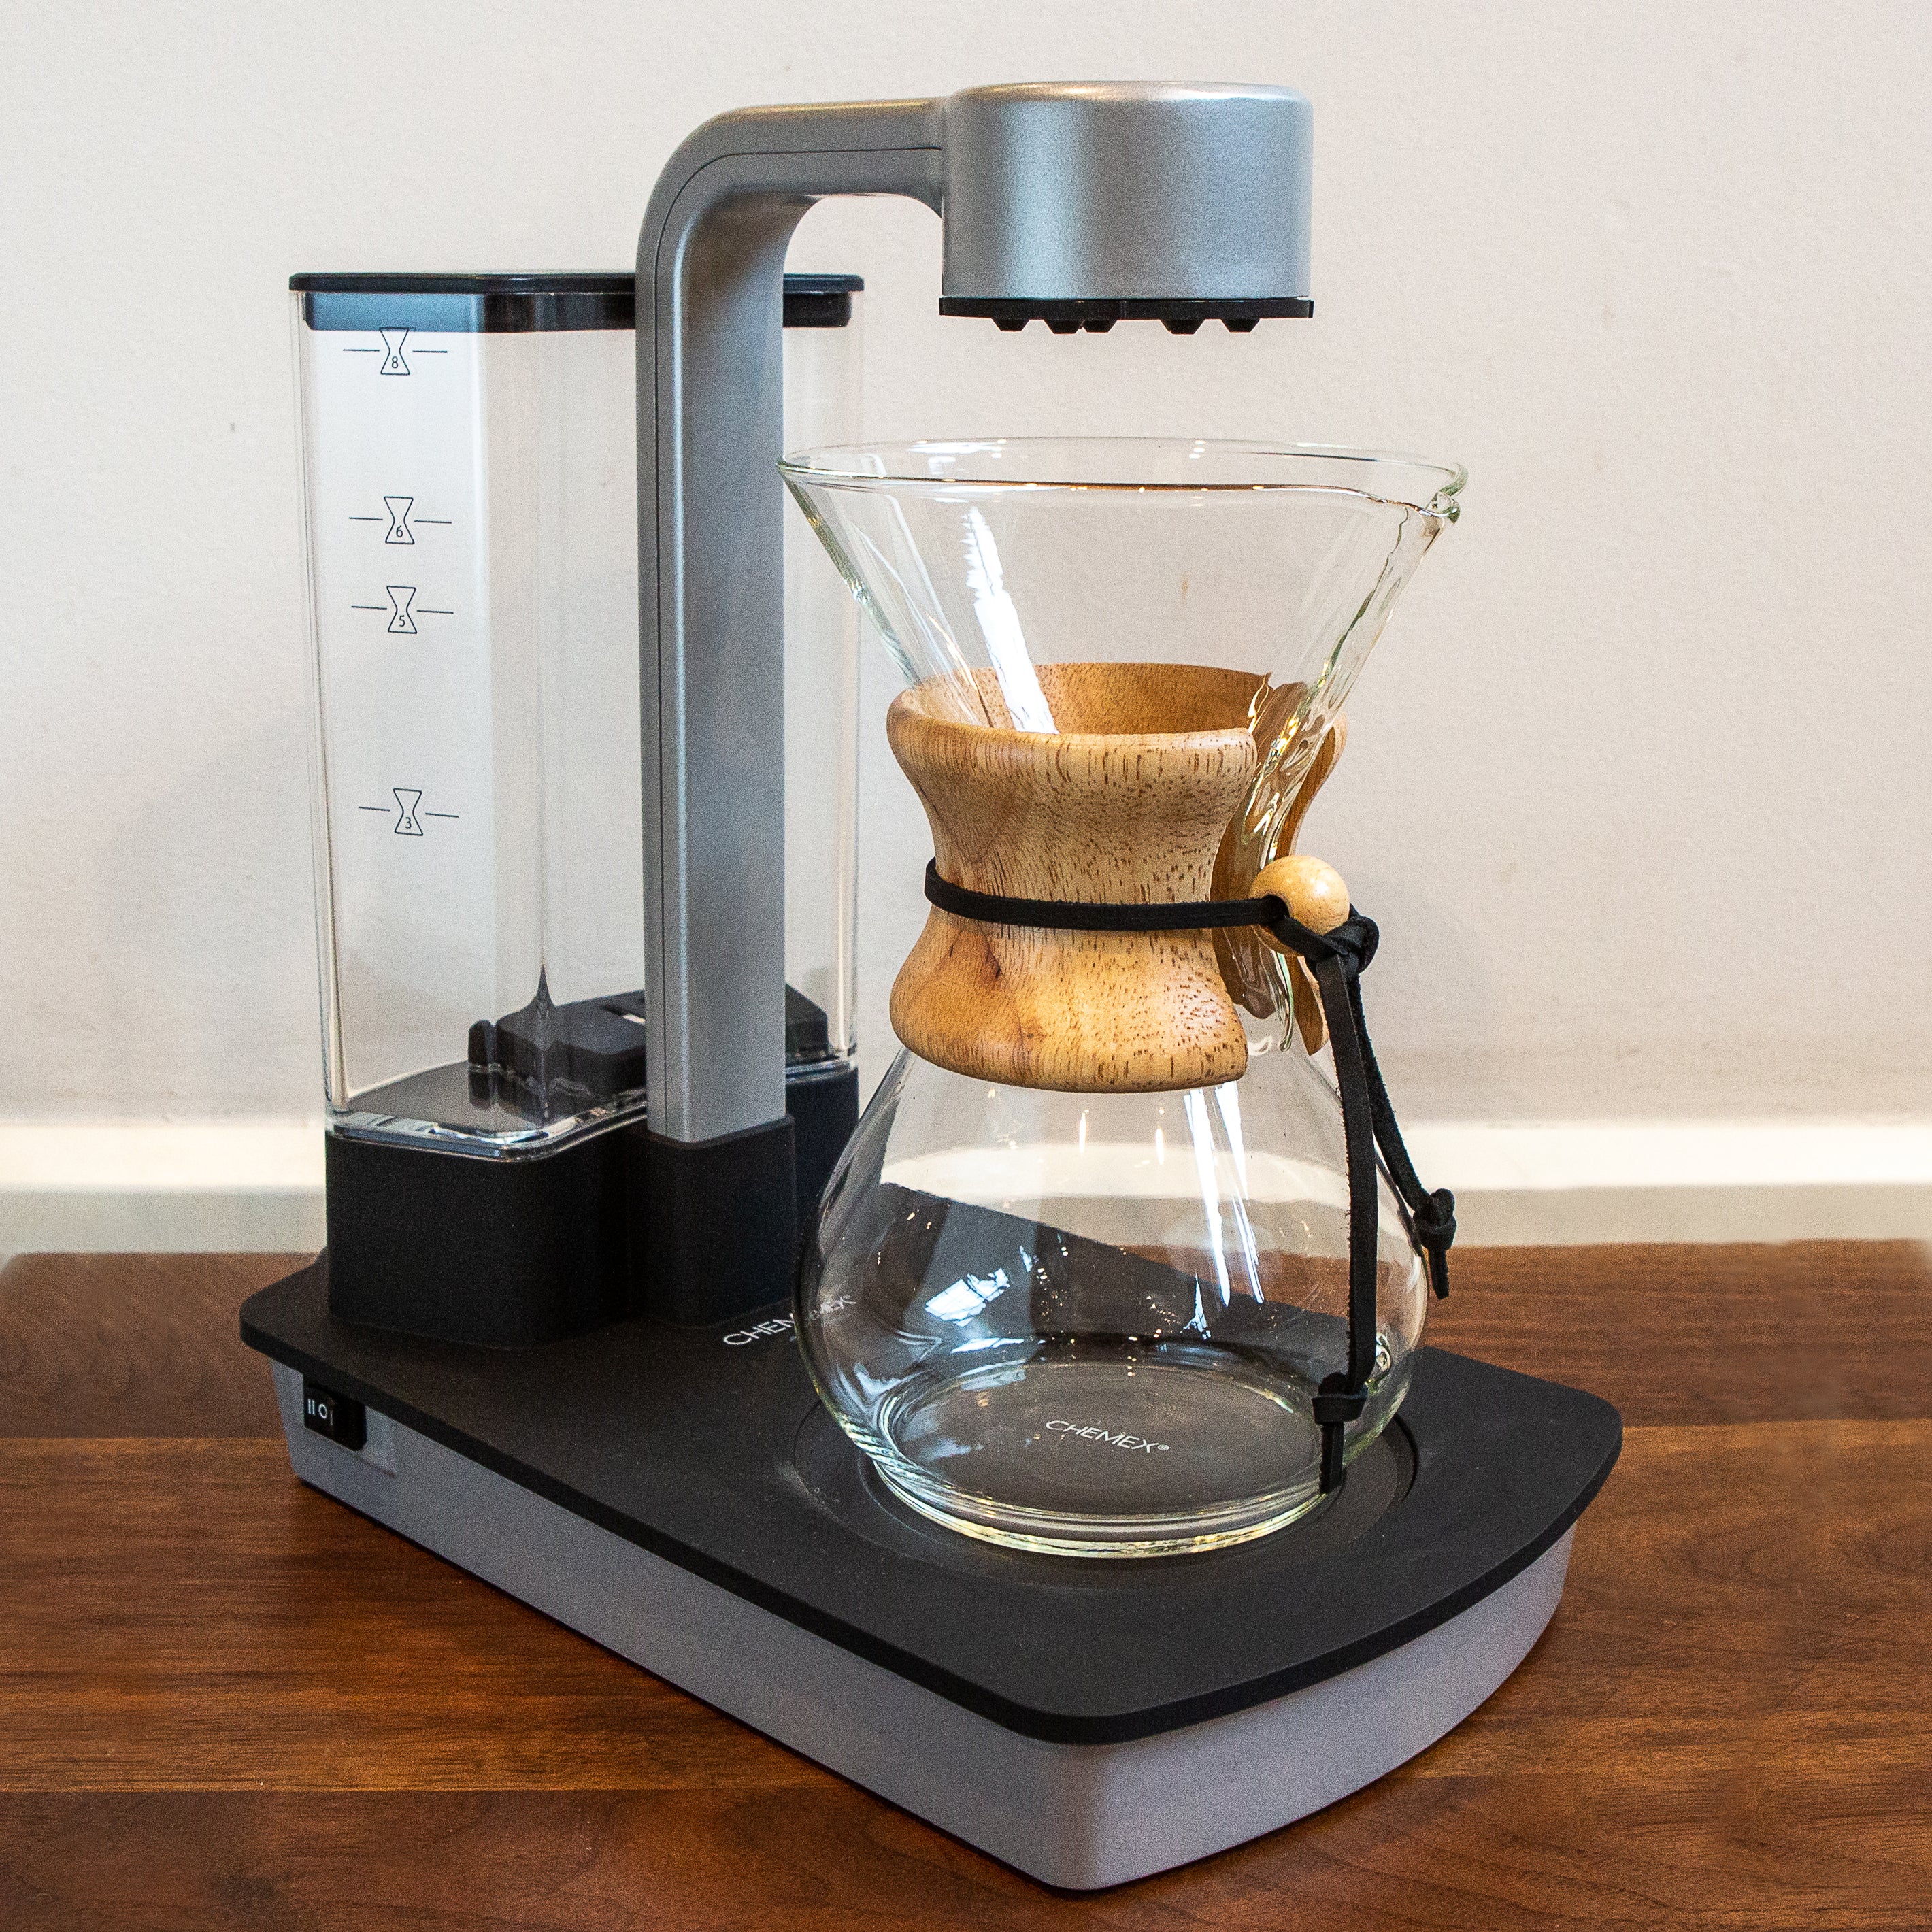 Chemex Coffee Maker - CAFE MOTO